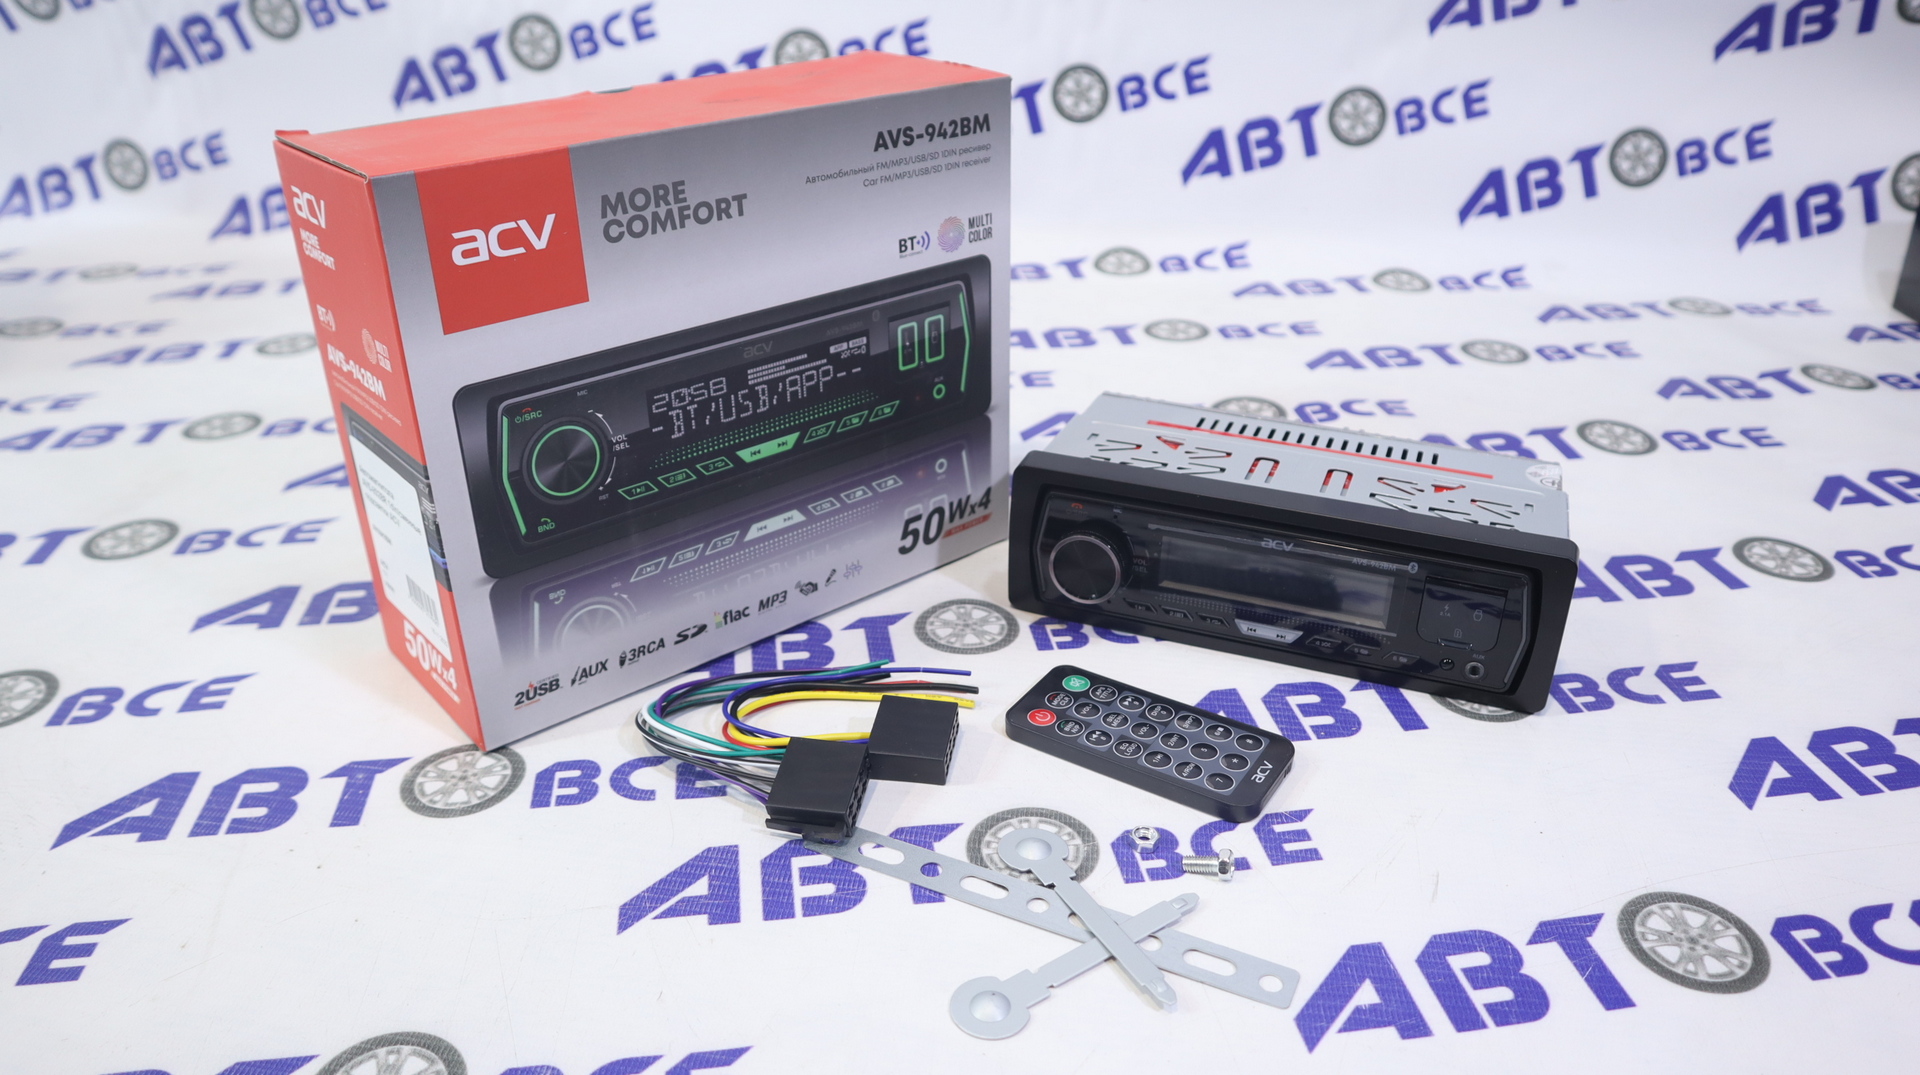 Автомагнитола (магнитофон) 1din мультицвет (USB/BT/SD/FM/AUX) AVS-942BM ACV